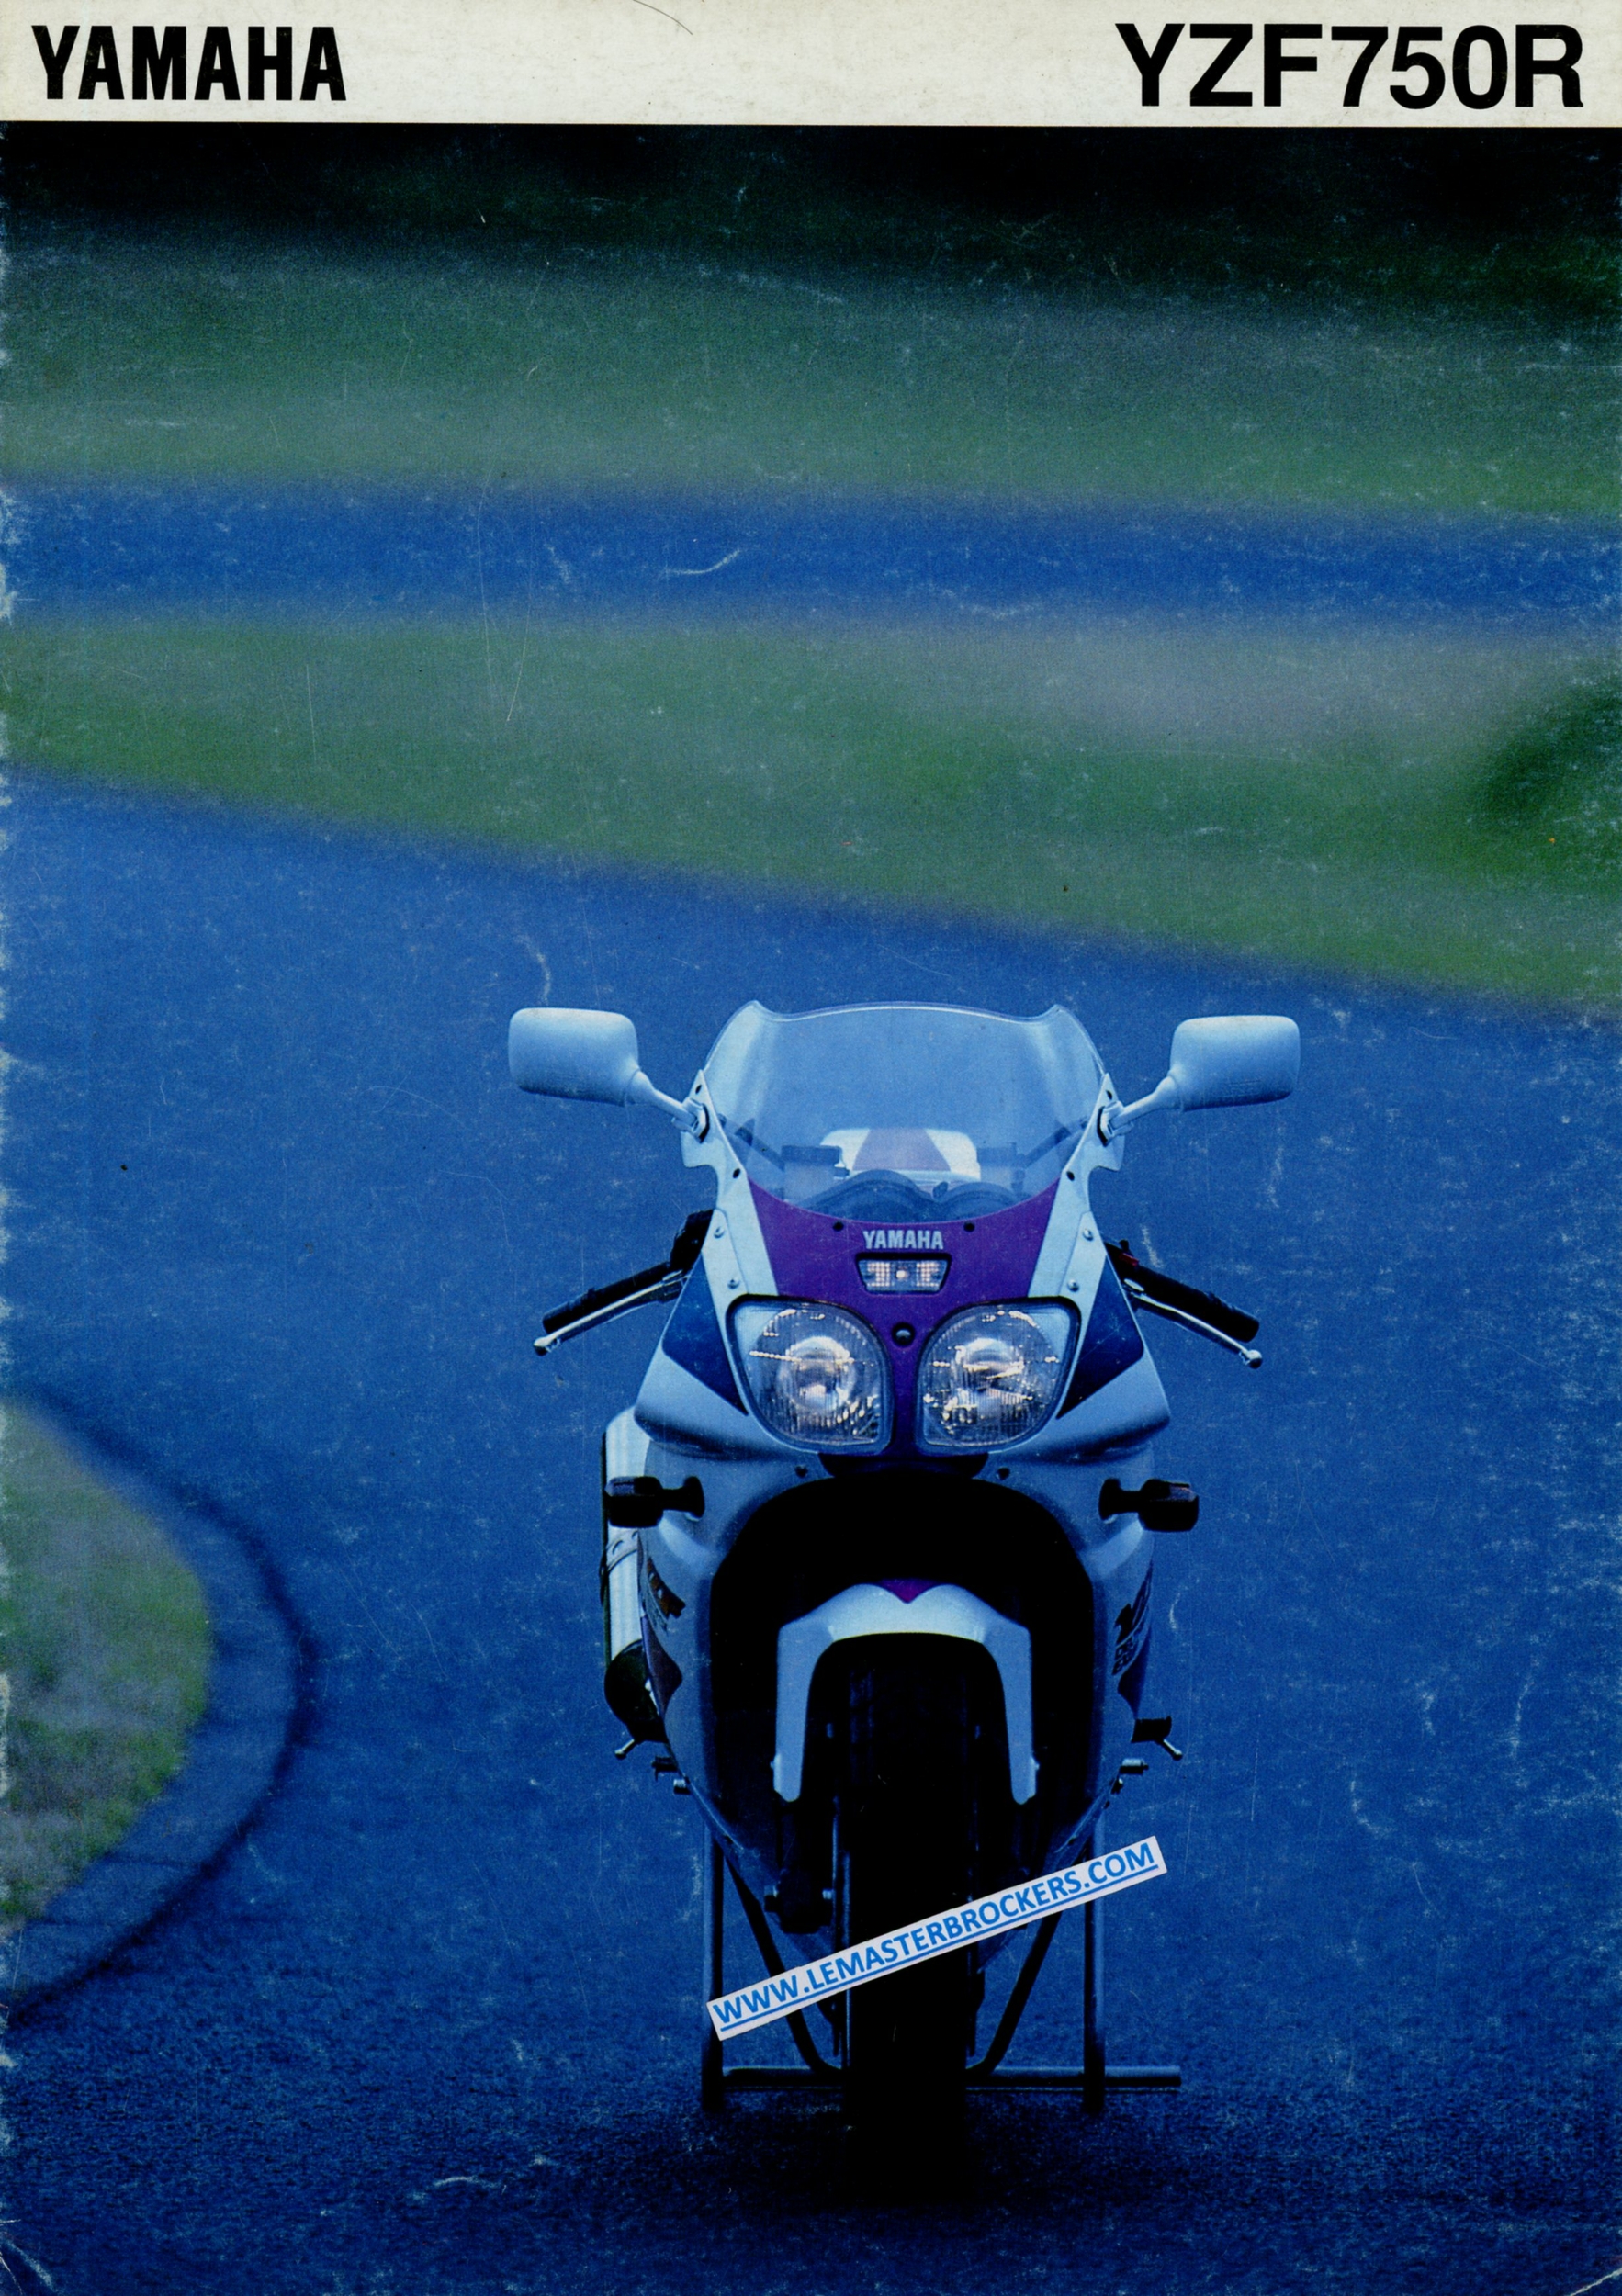 BROCHURE-MOTO-YAMAHA-YZF-750-YZF750R-1993-LEMASTERBROCKERS-CATALOGUE-PROSPECTUS-MOTORCYCLES